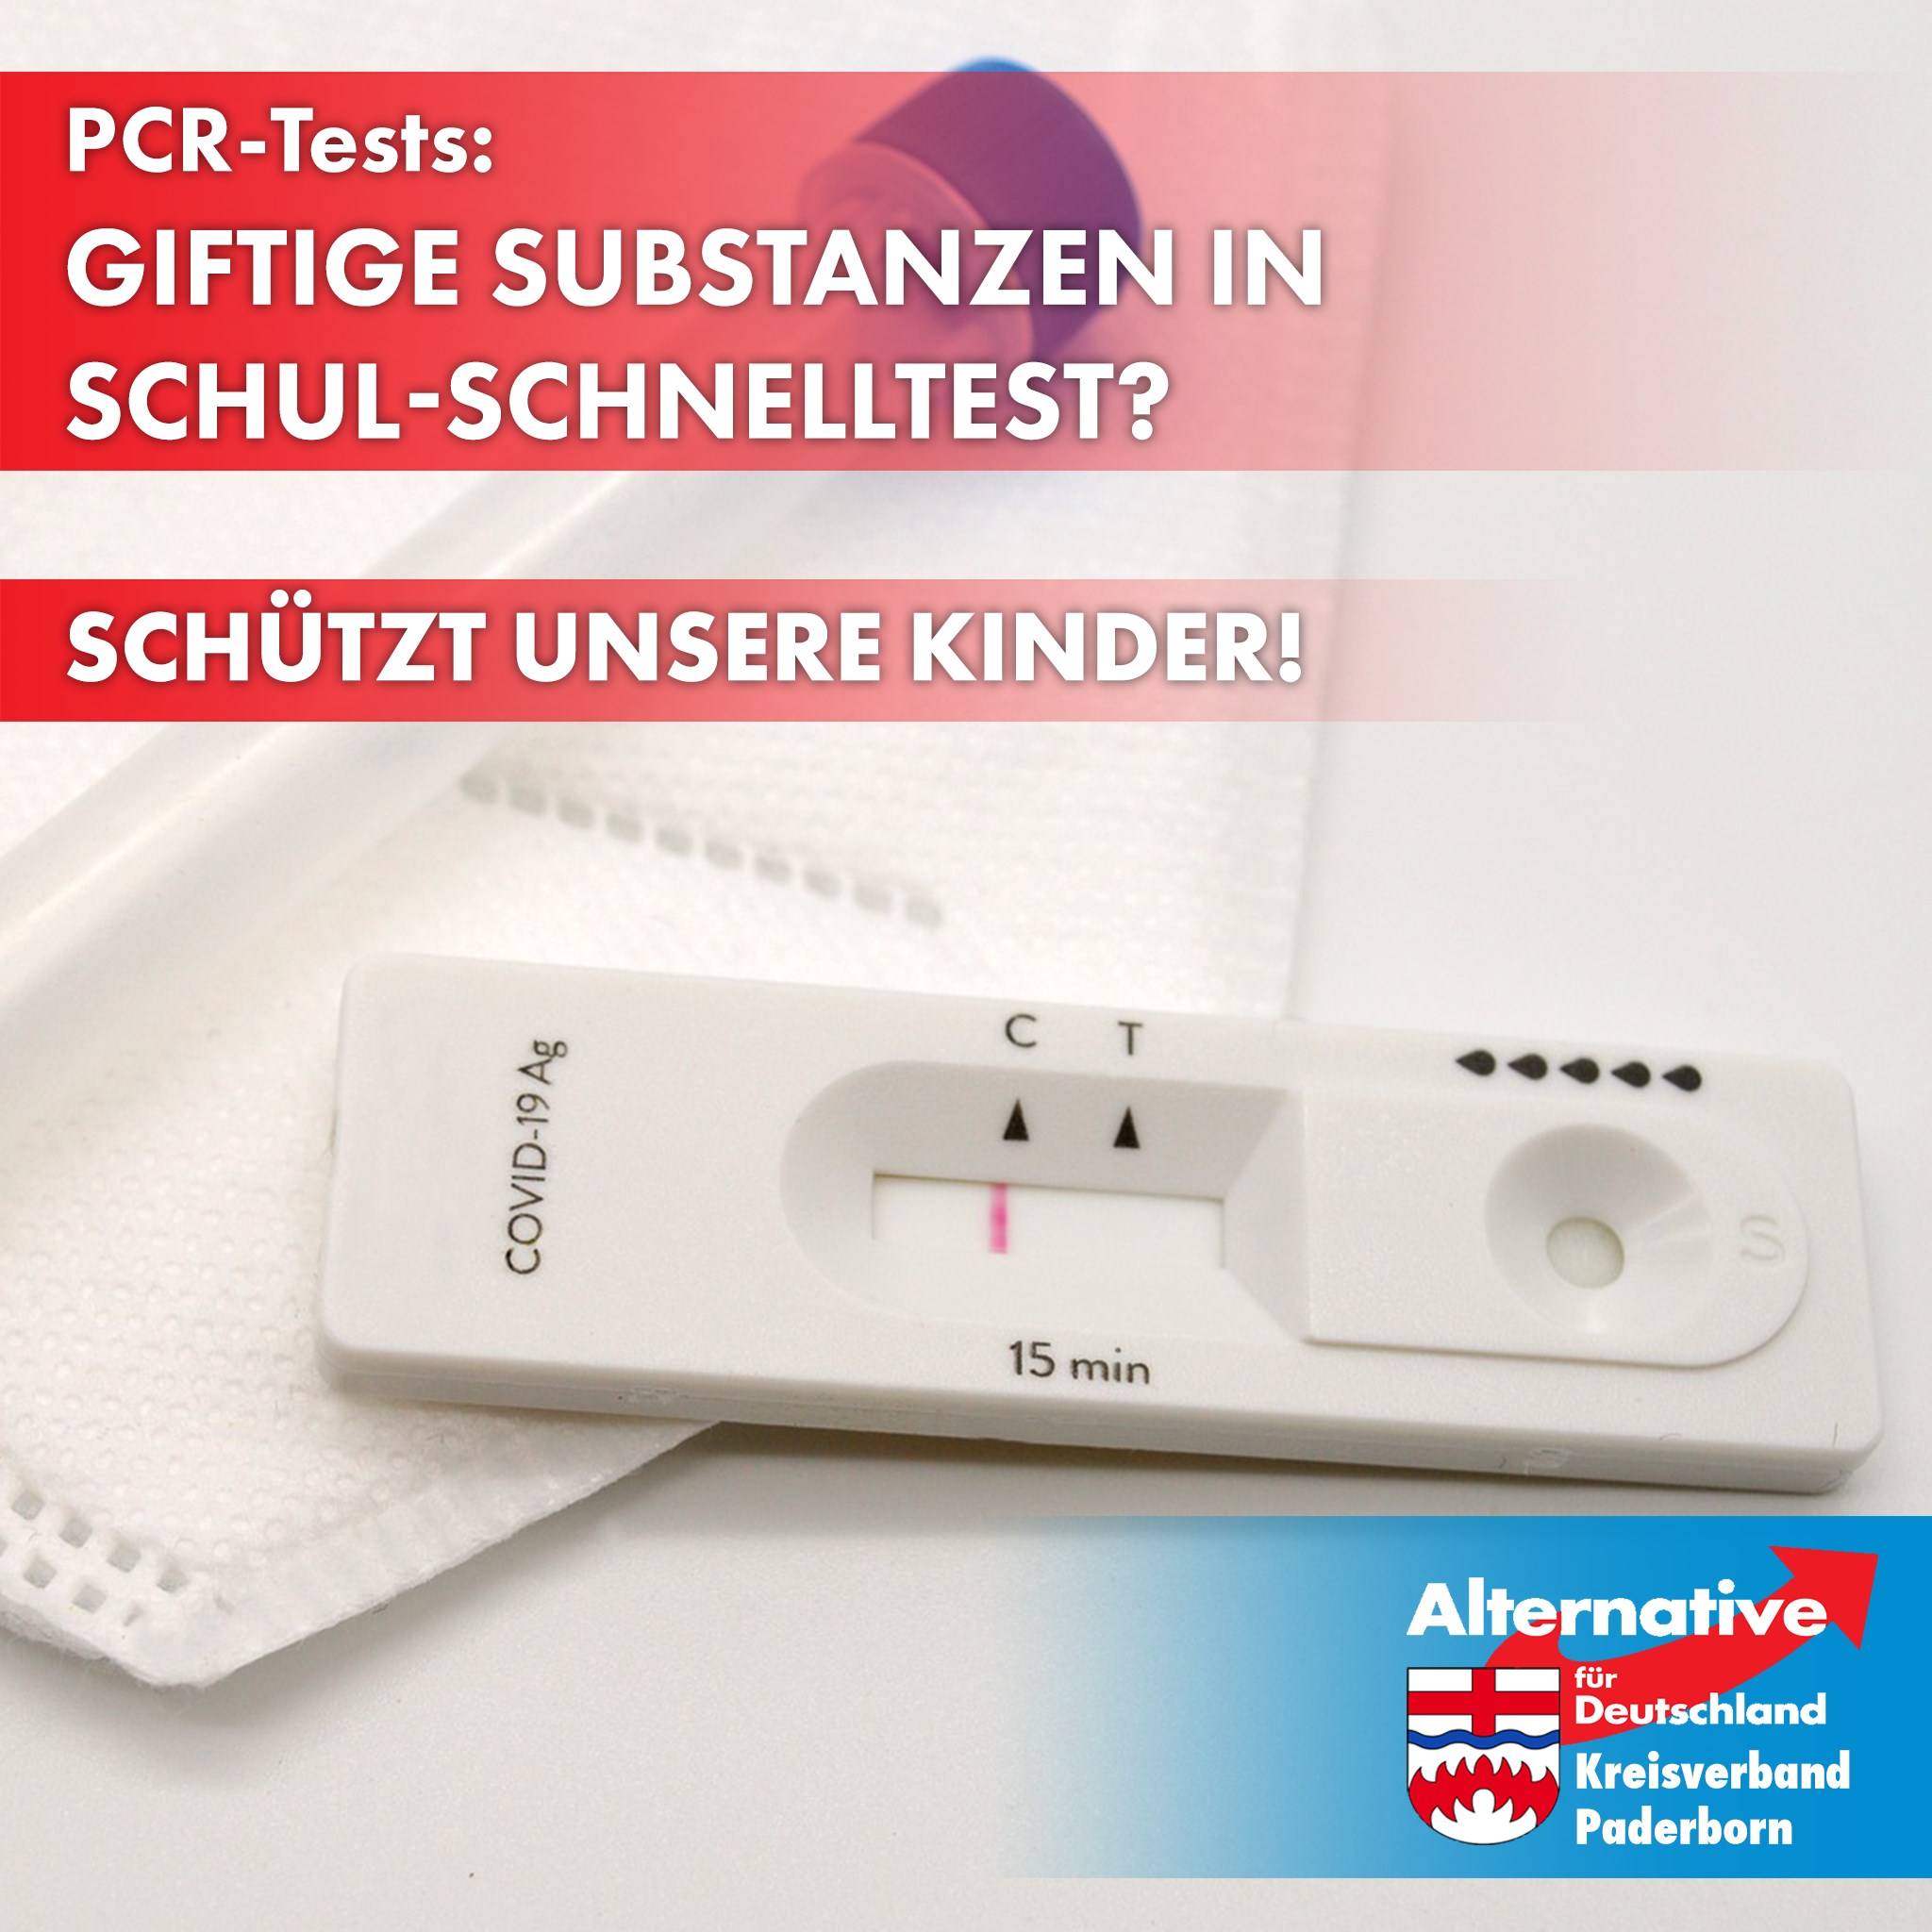 You are currently viewing Giftige Substanzen in Schul-Schnelltest in Hamburg?